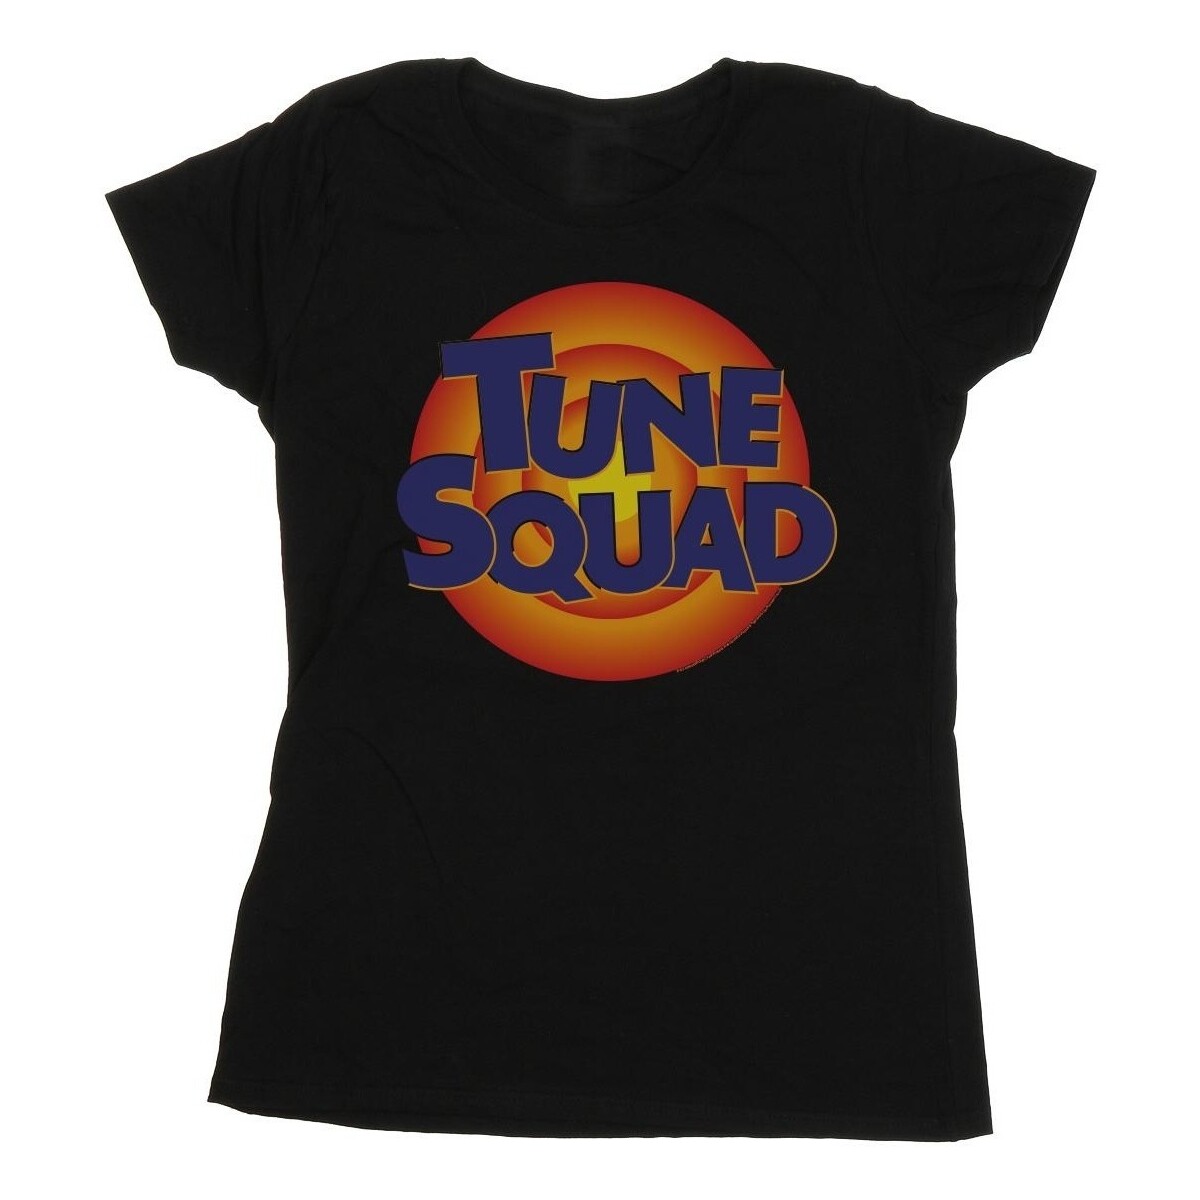 textil Mujer Camisetas manga larga Space Jam: A New Legacy Tune Squad Logo Negro